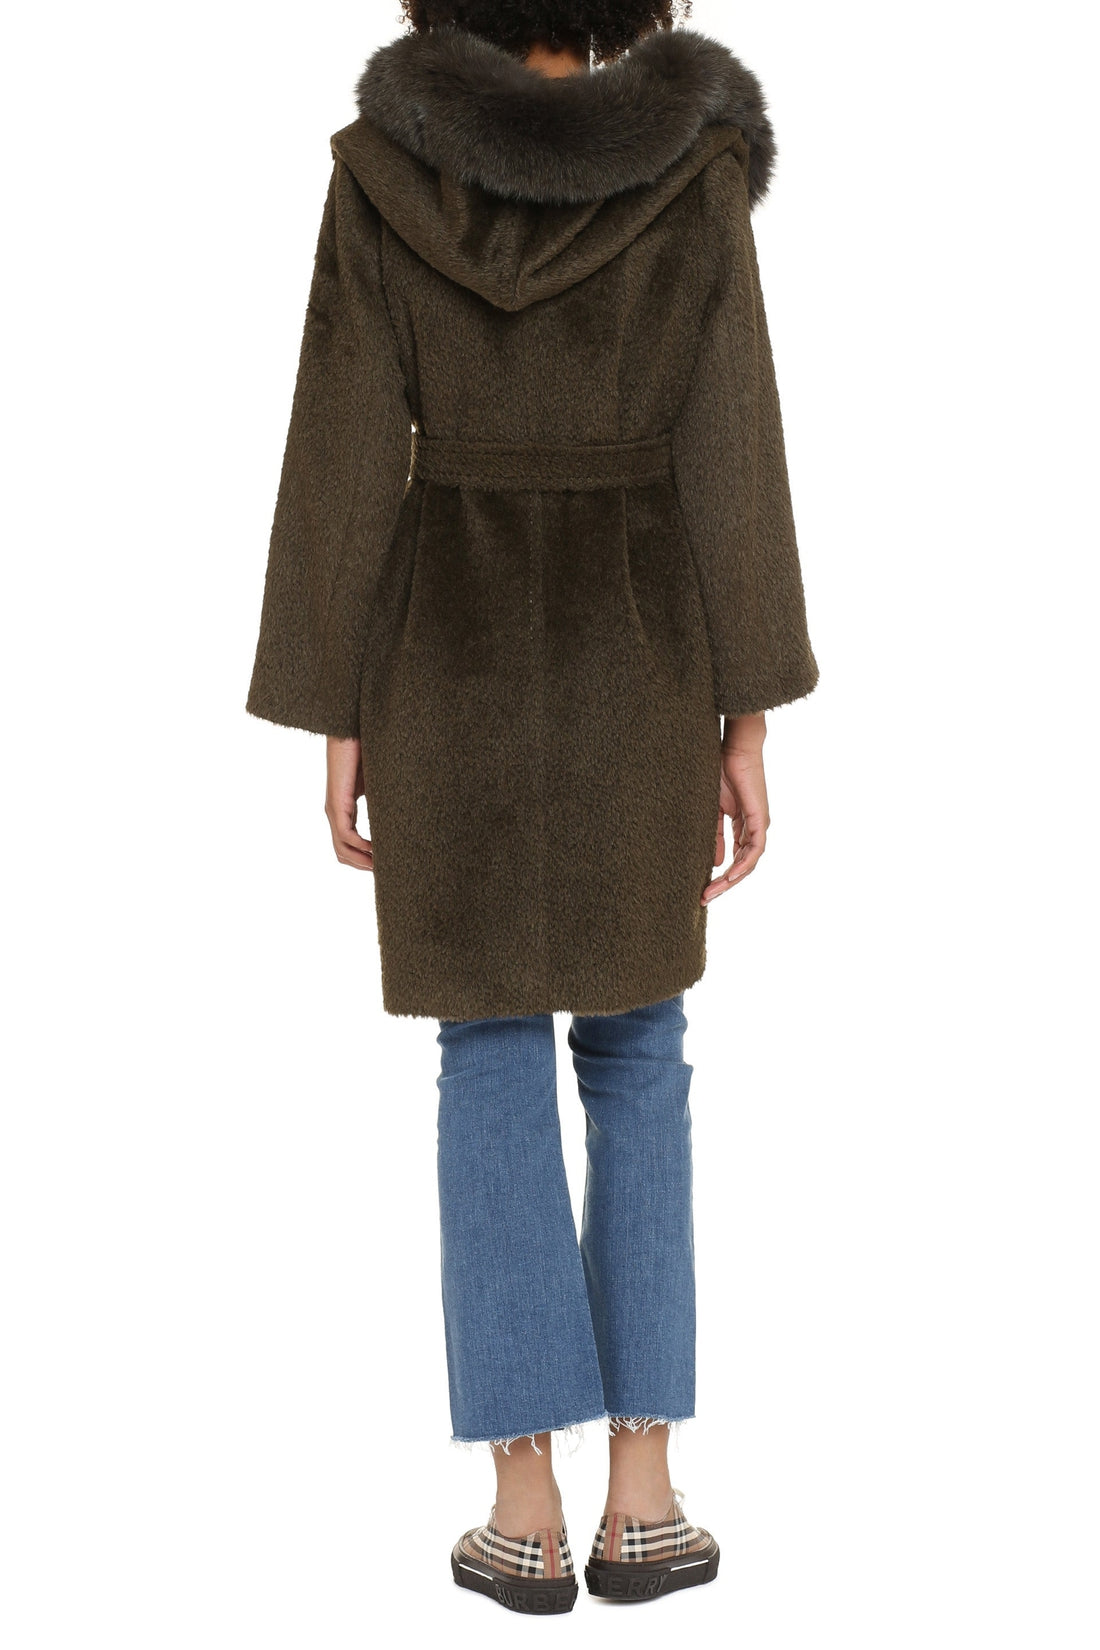 Max Mara Studio-OUTLET-SALE-Gessy hooded alpaca blend coat-ARCHIVIST